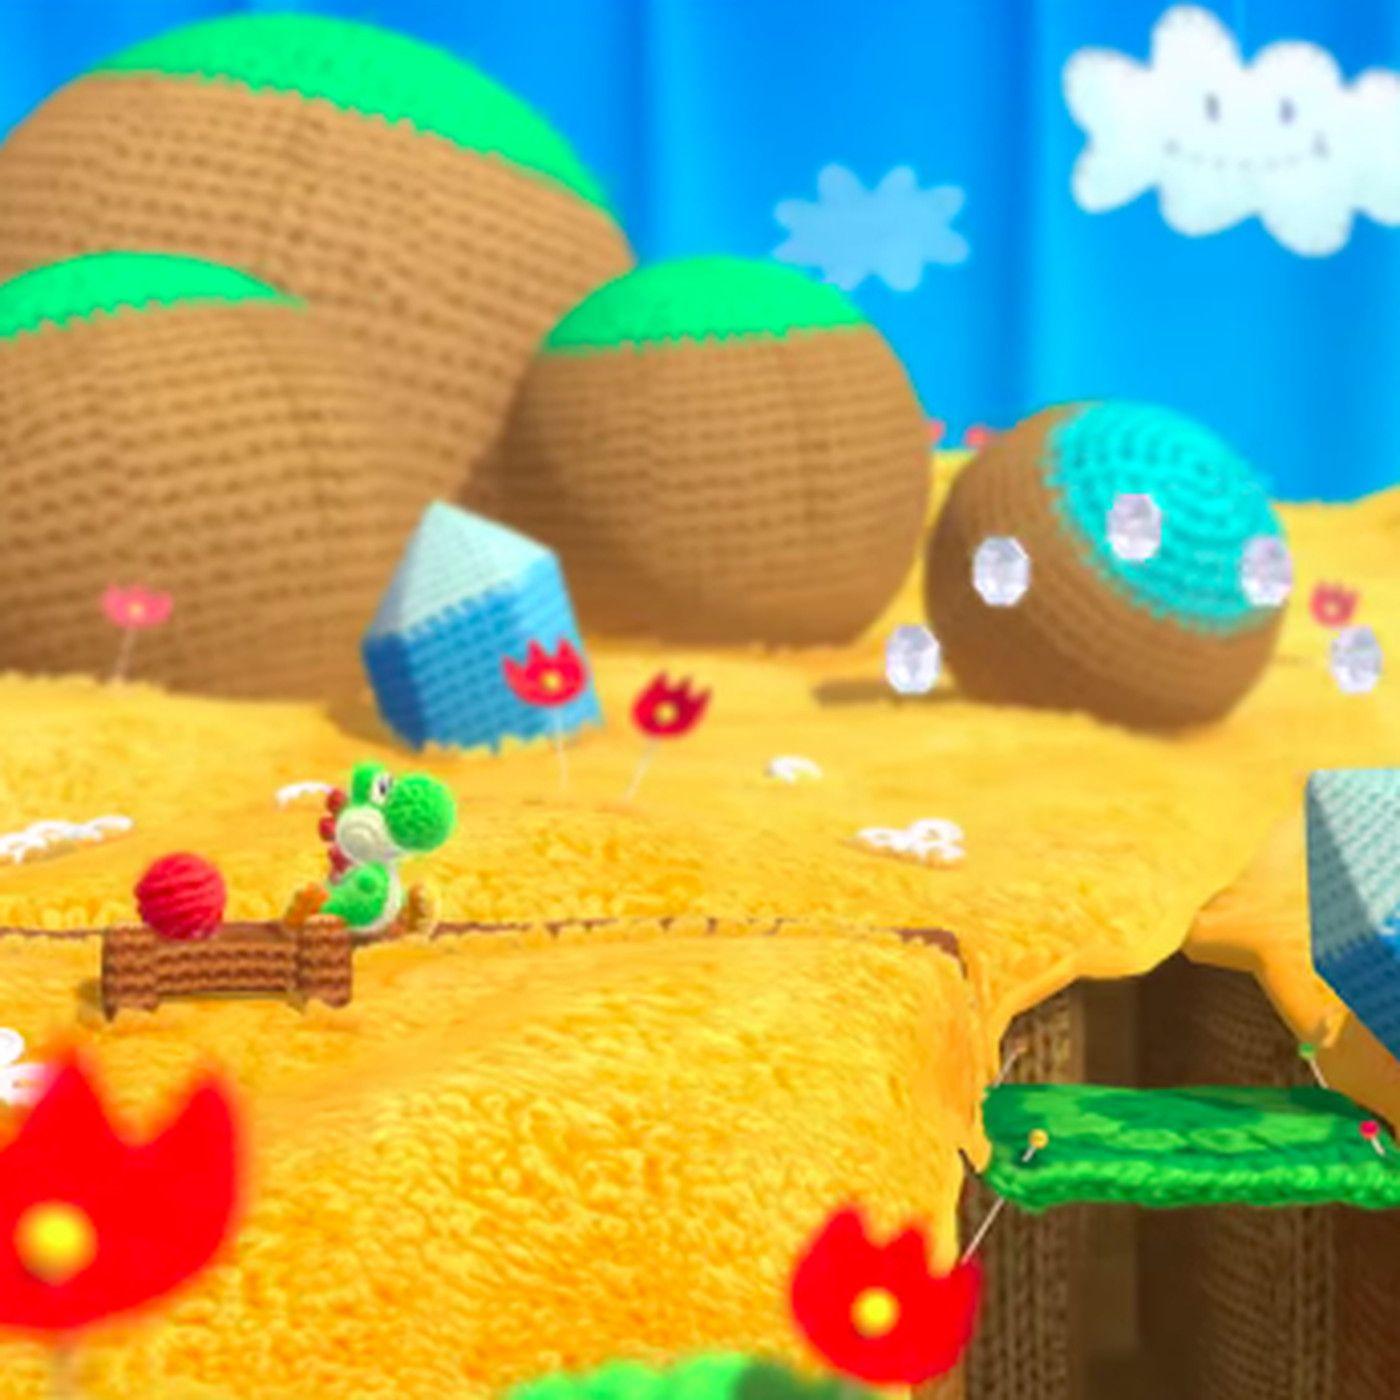 Yep, this Yoshi's Woolly World gameplay trailer confirms everything